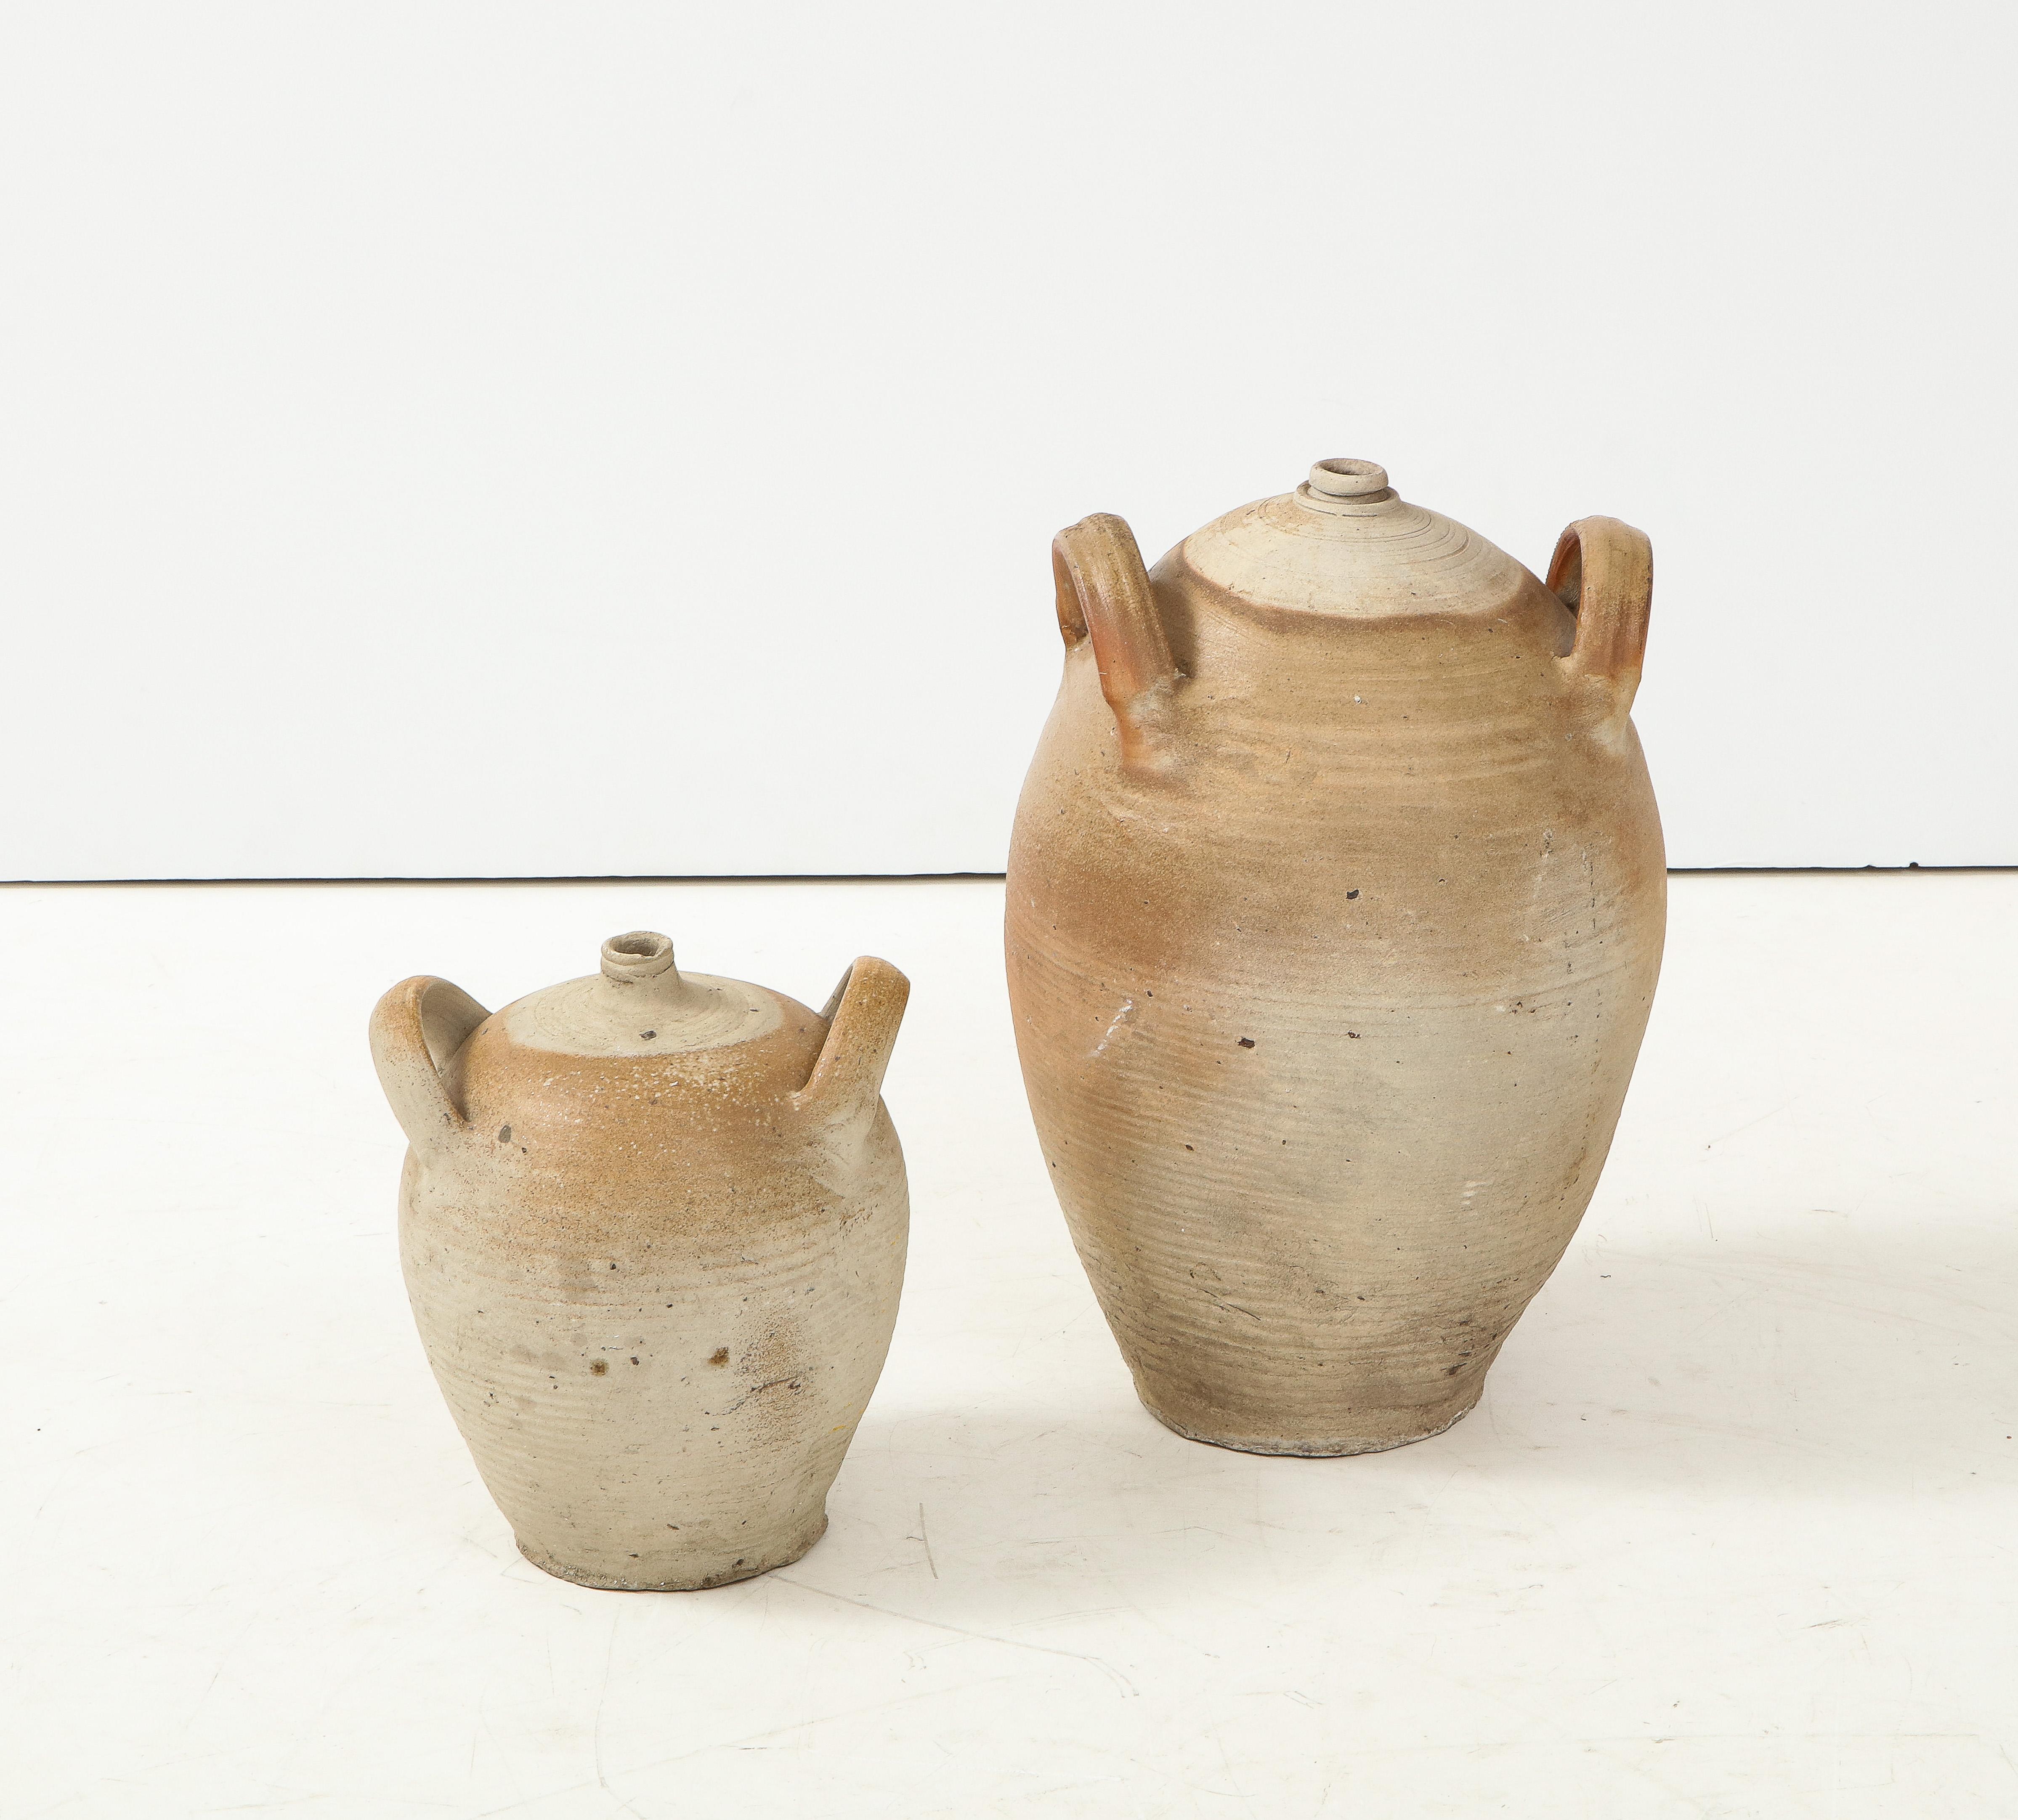 French Provincial Stoneware vintage pottery oil jar, jug, vase or vessel.
France, circa 1960 
Size: Tall: 19